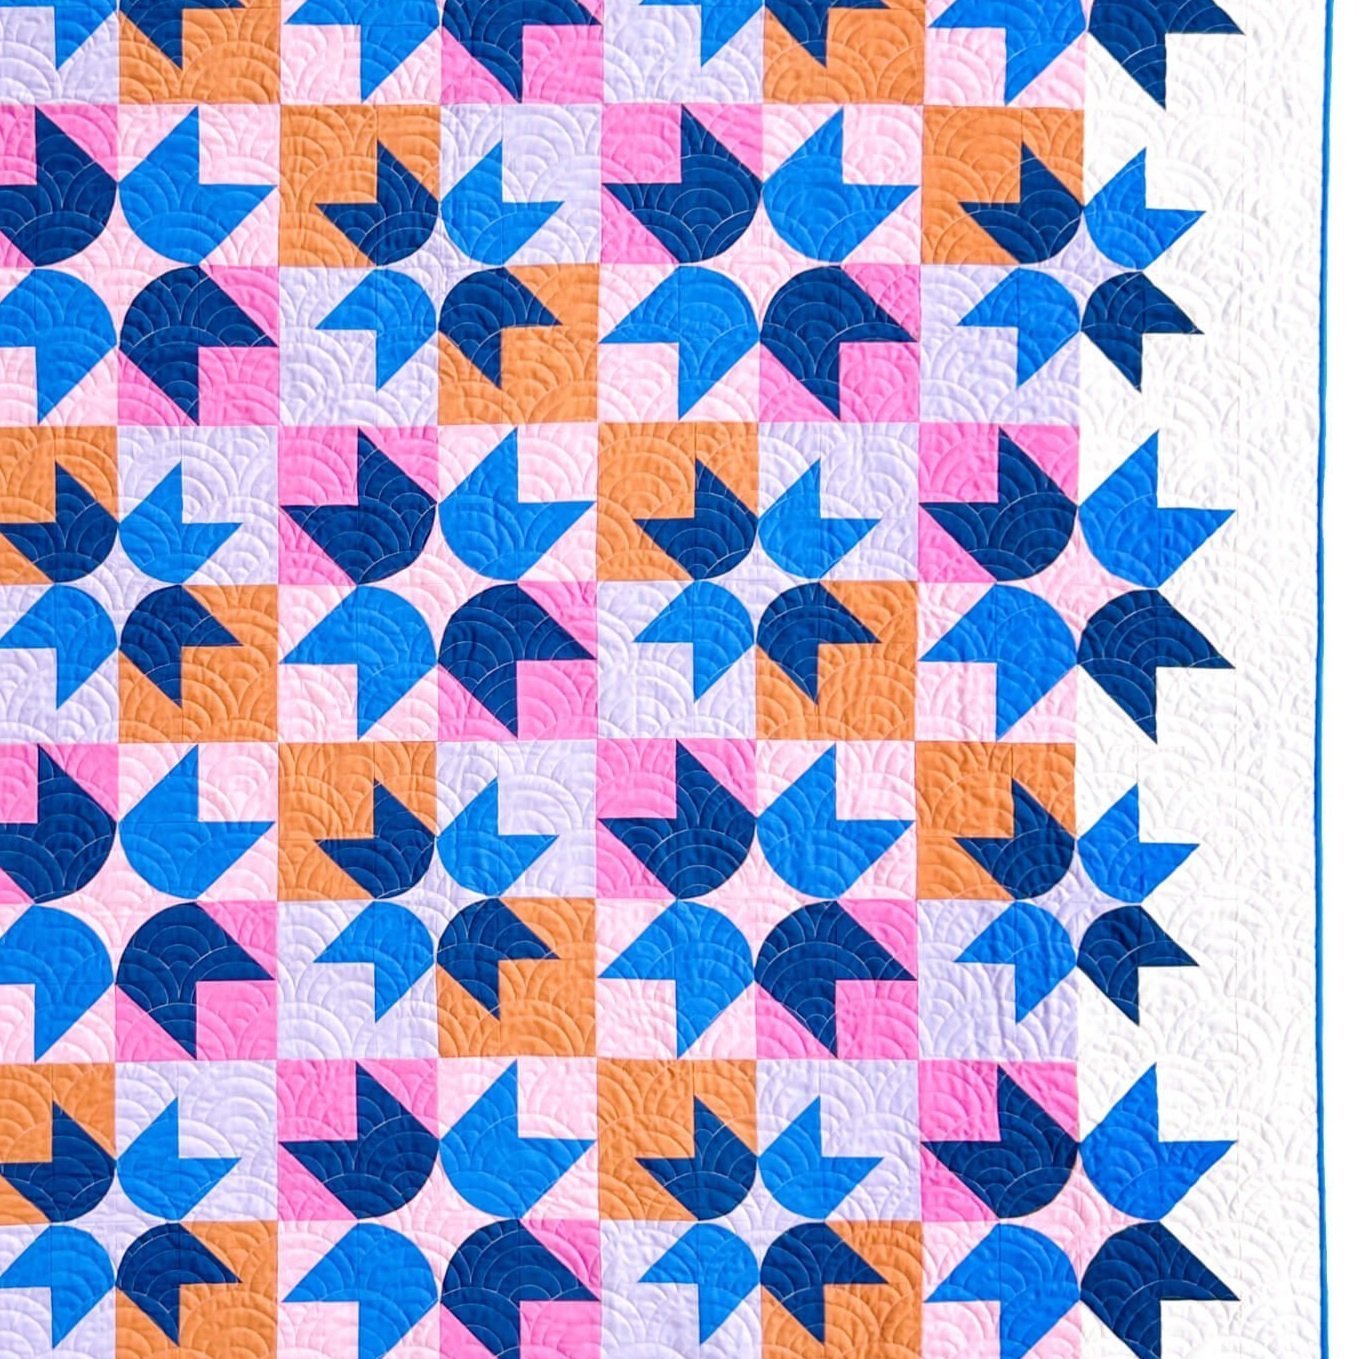 Final+Starry+Picnic+Quilt+Megan+Collins+Quilt+Design.jpg